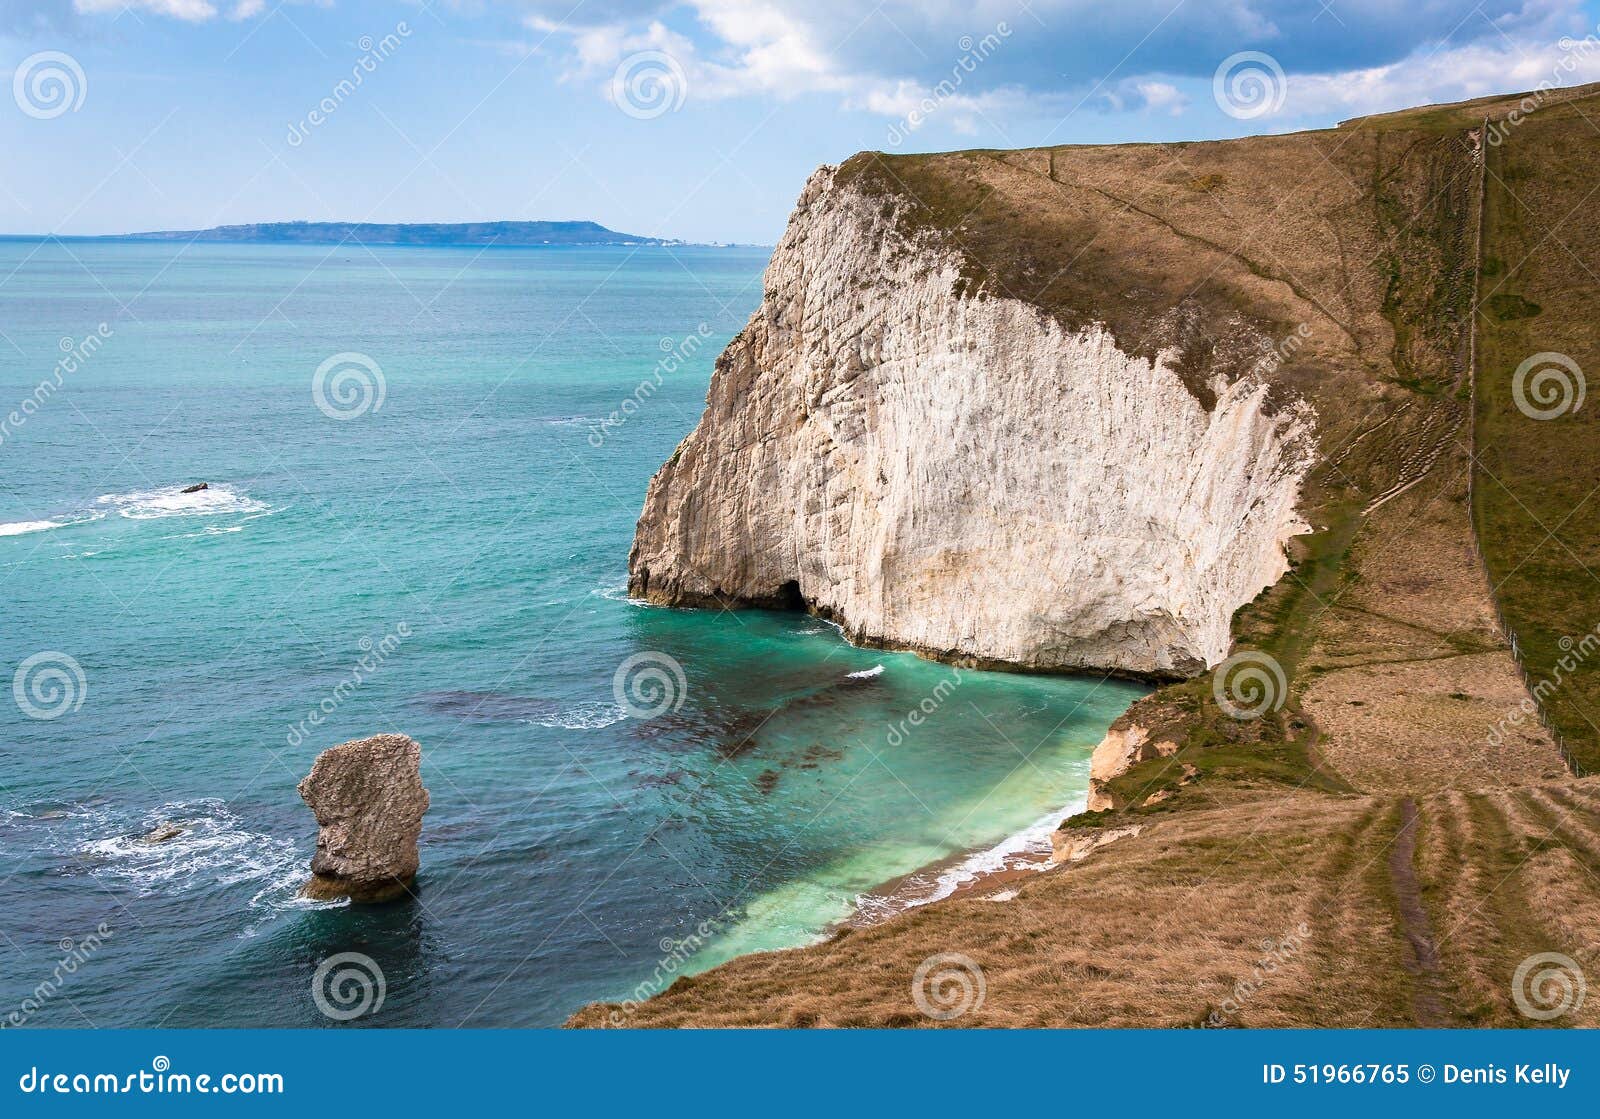 jurassic coast cliffs dorset england